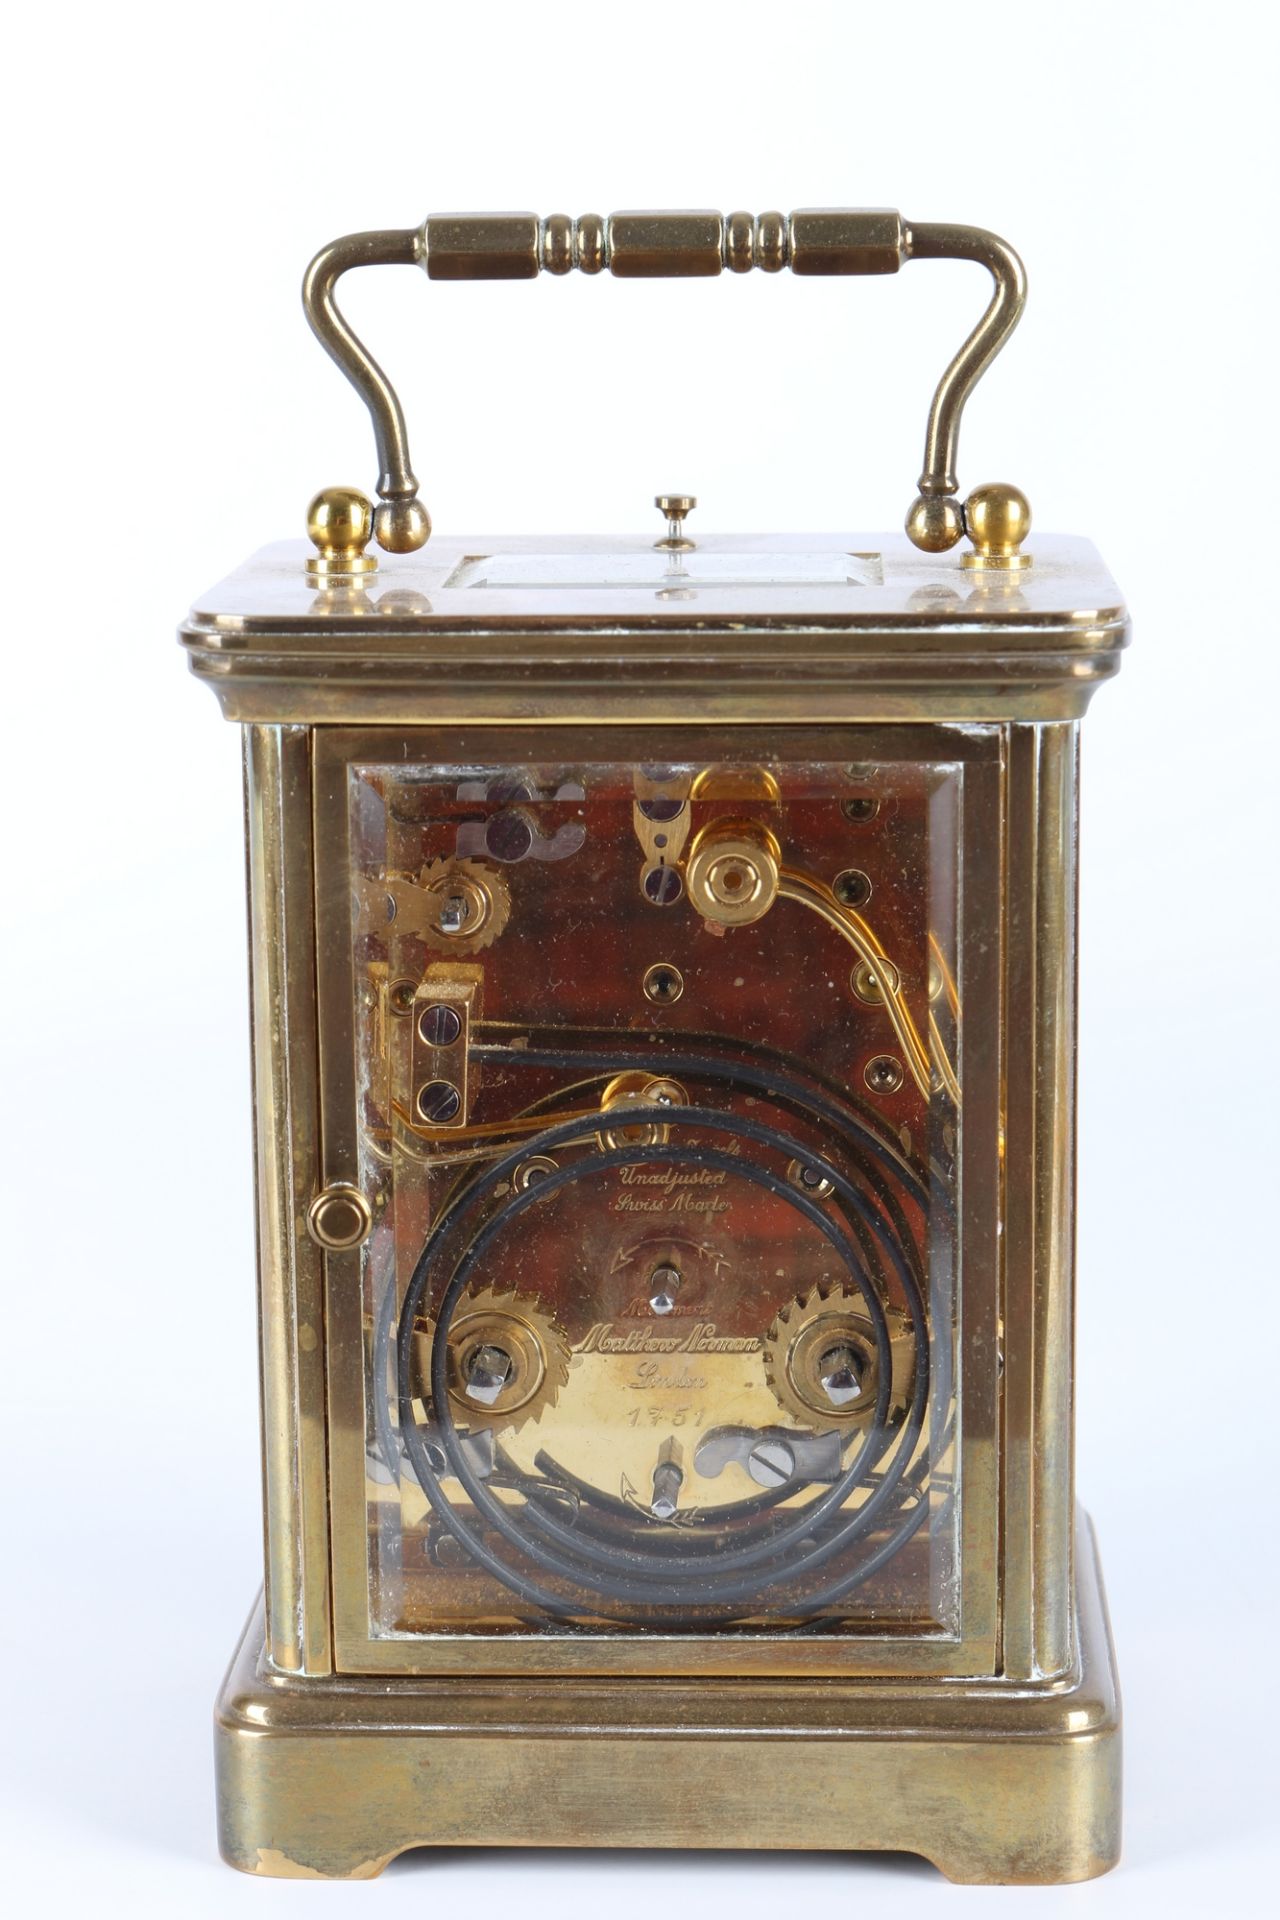 Matthew Norman Reiseuhr, carriage clock, - Image 3 of 5